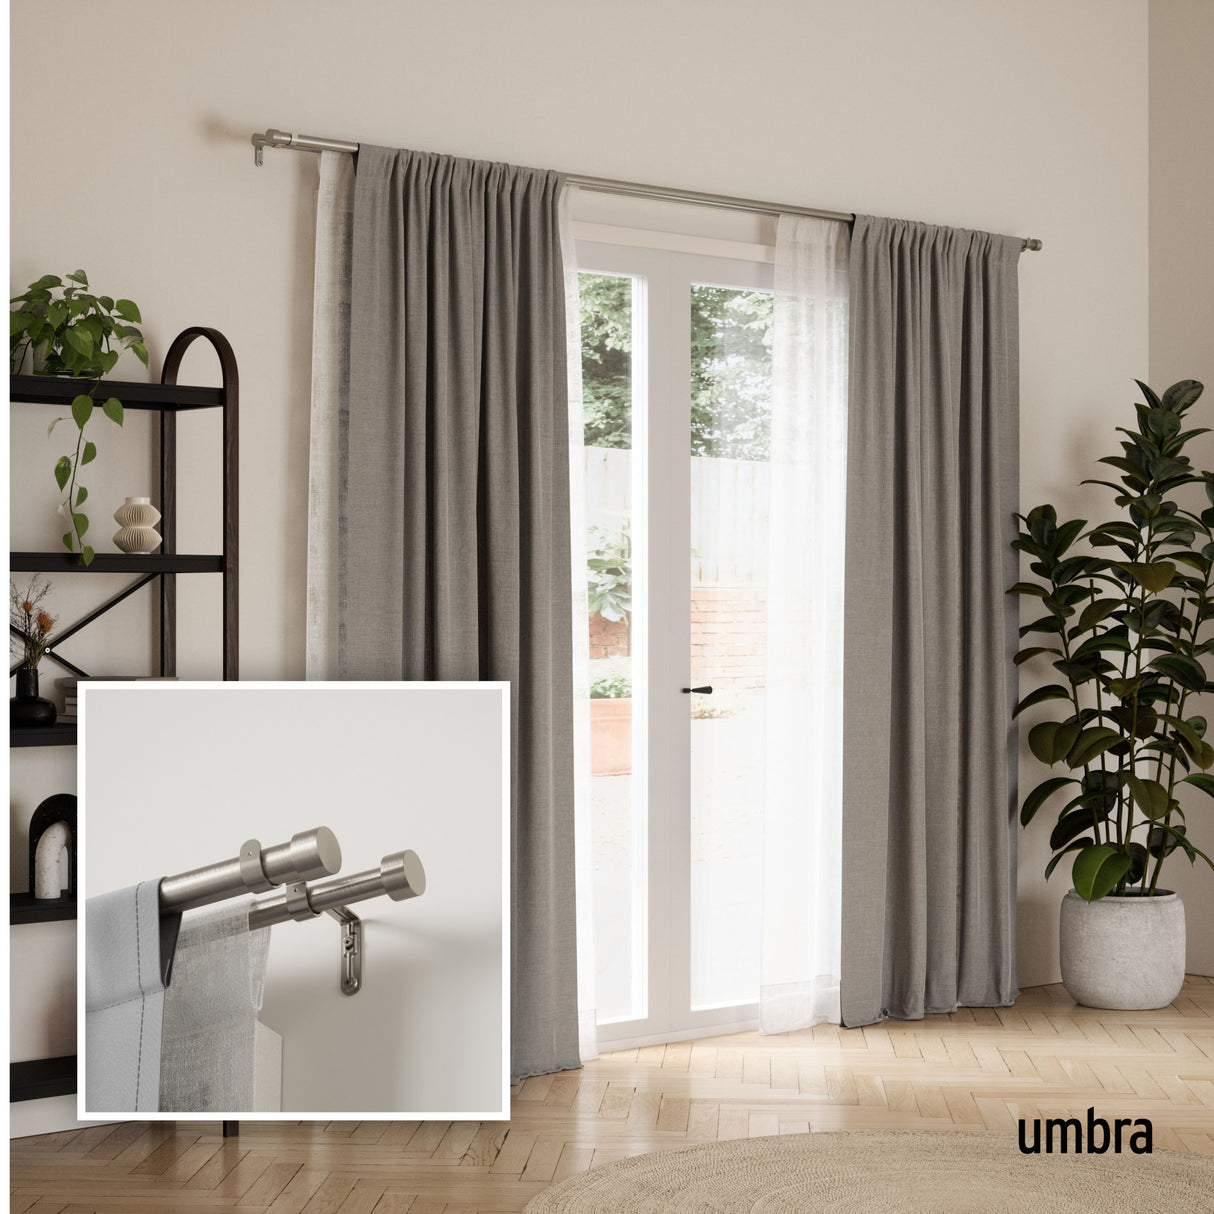 Double Curtain Rods | color: Nickel | size: 66-120" (168-305 cm) | diameter: 1" (2.5 cm)